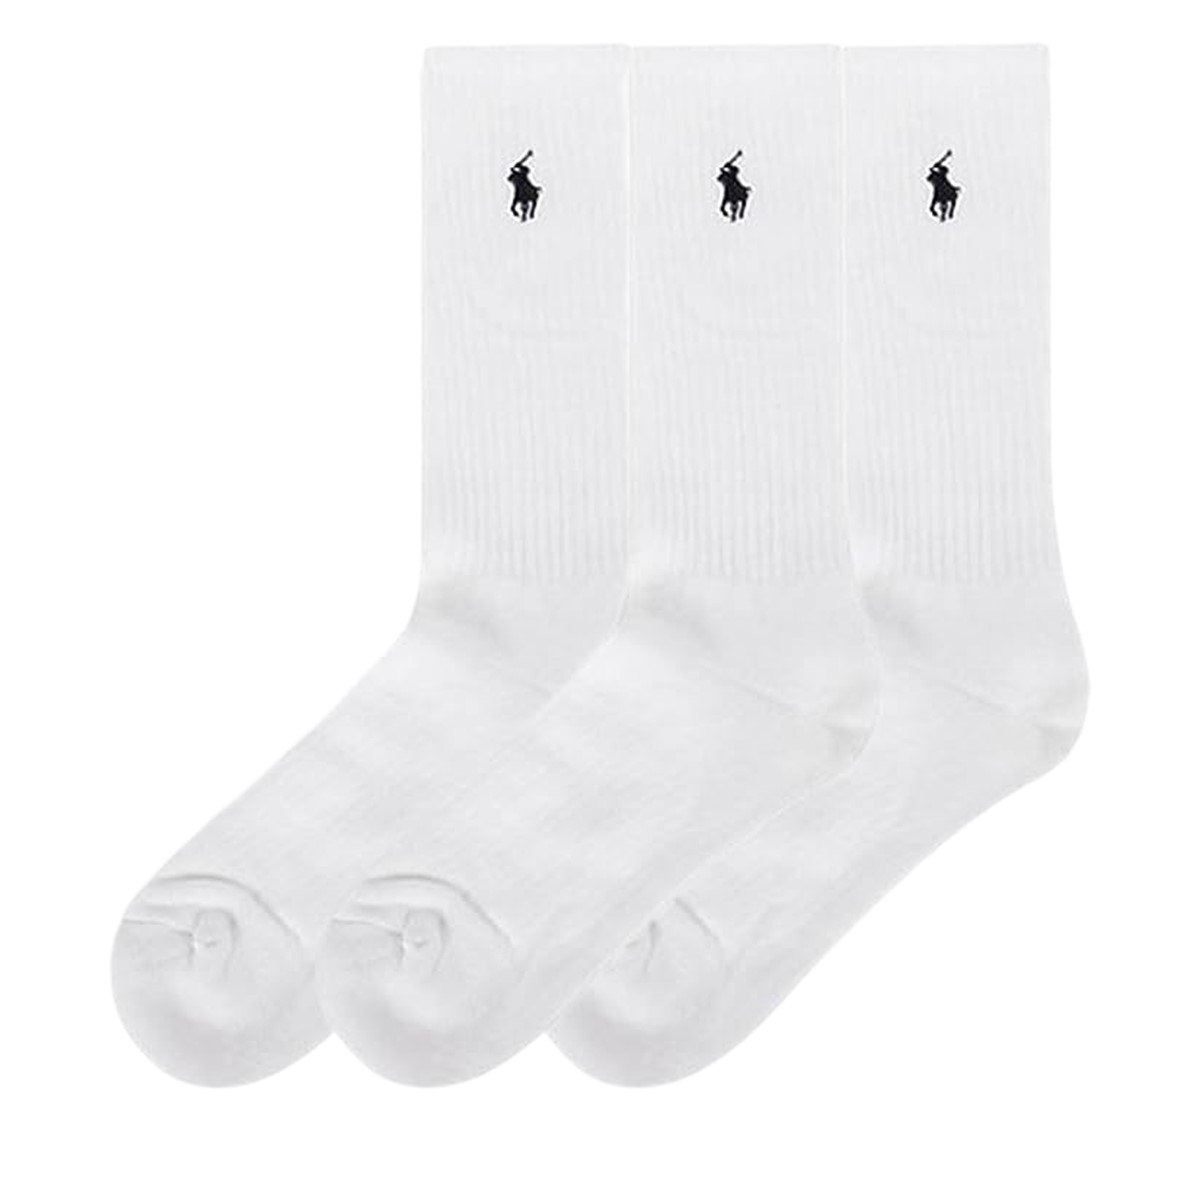 Men's Classic Cotton Crew Socks in White